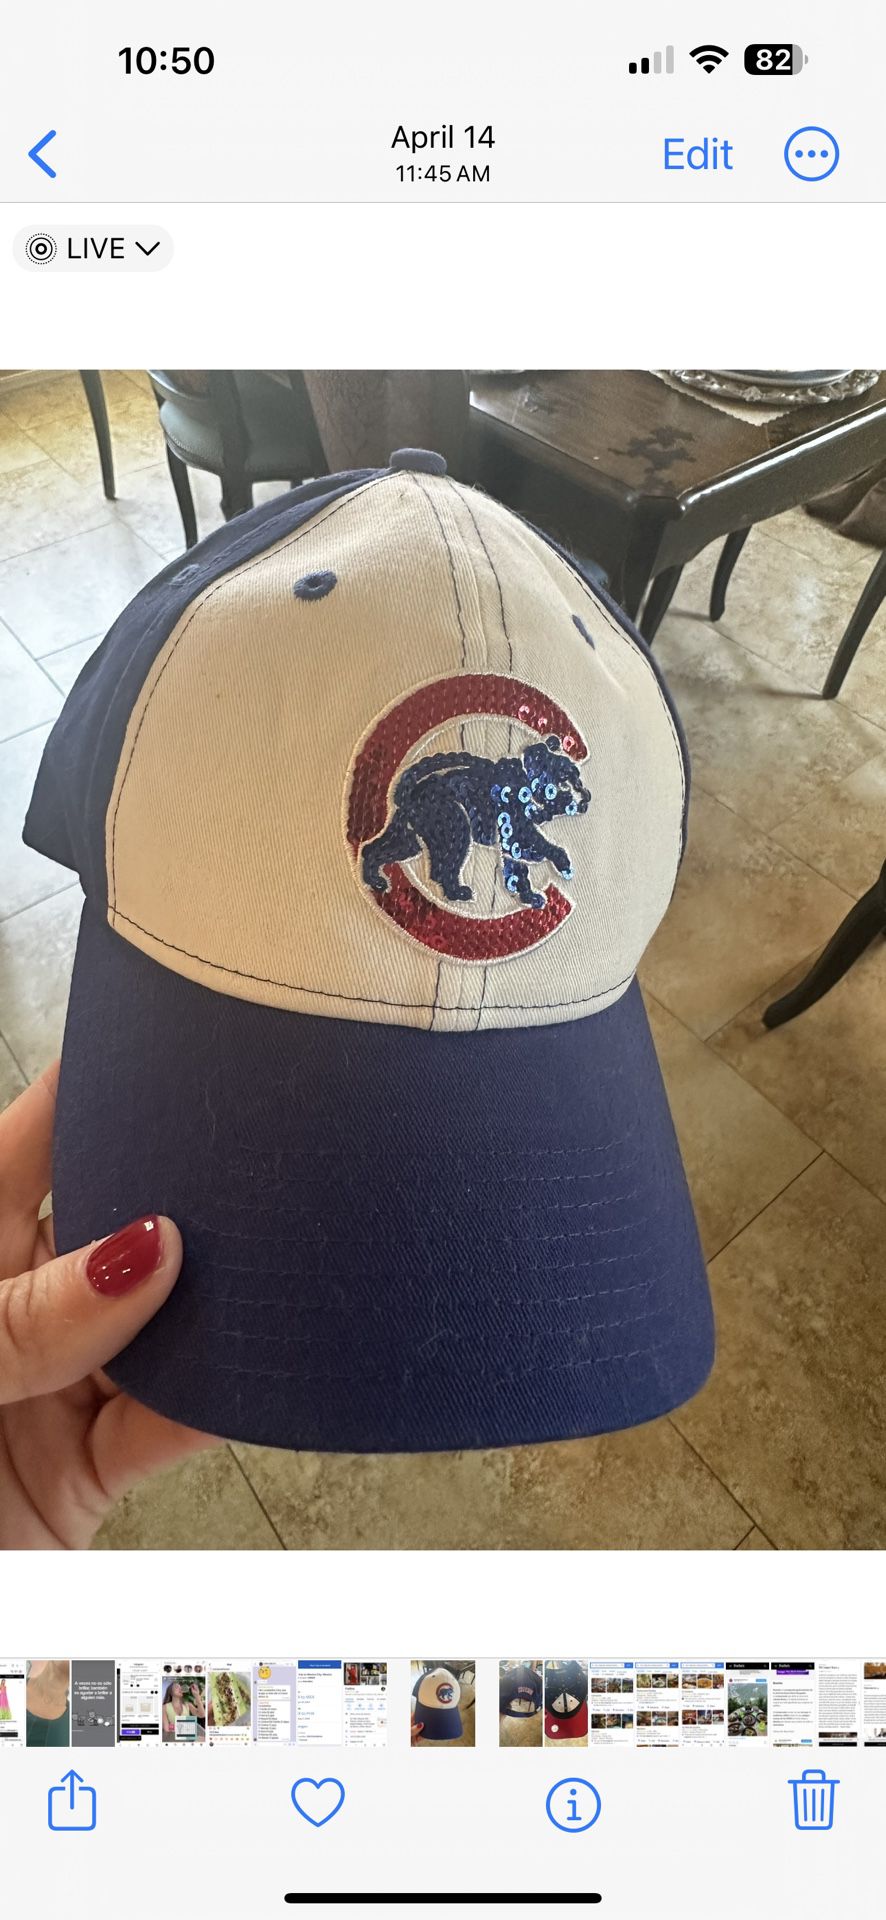 Cubs original baseball hat 